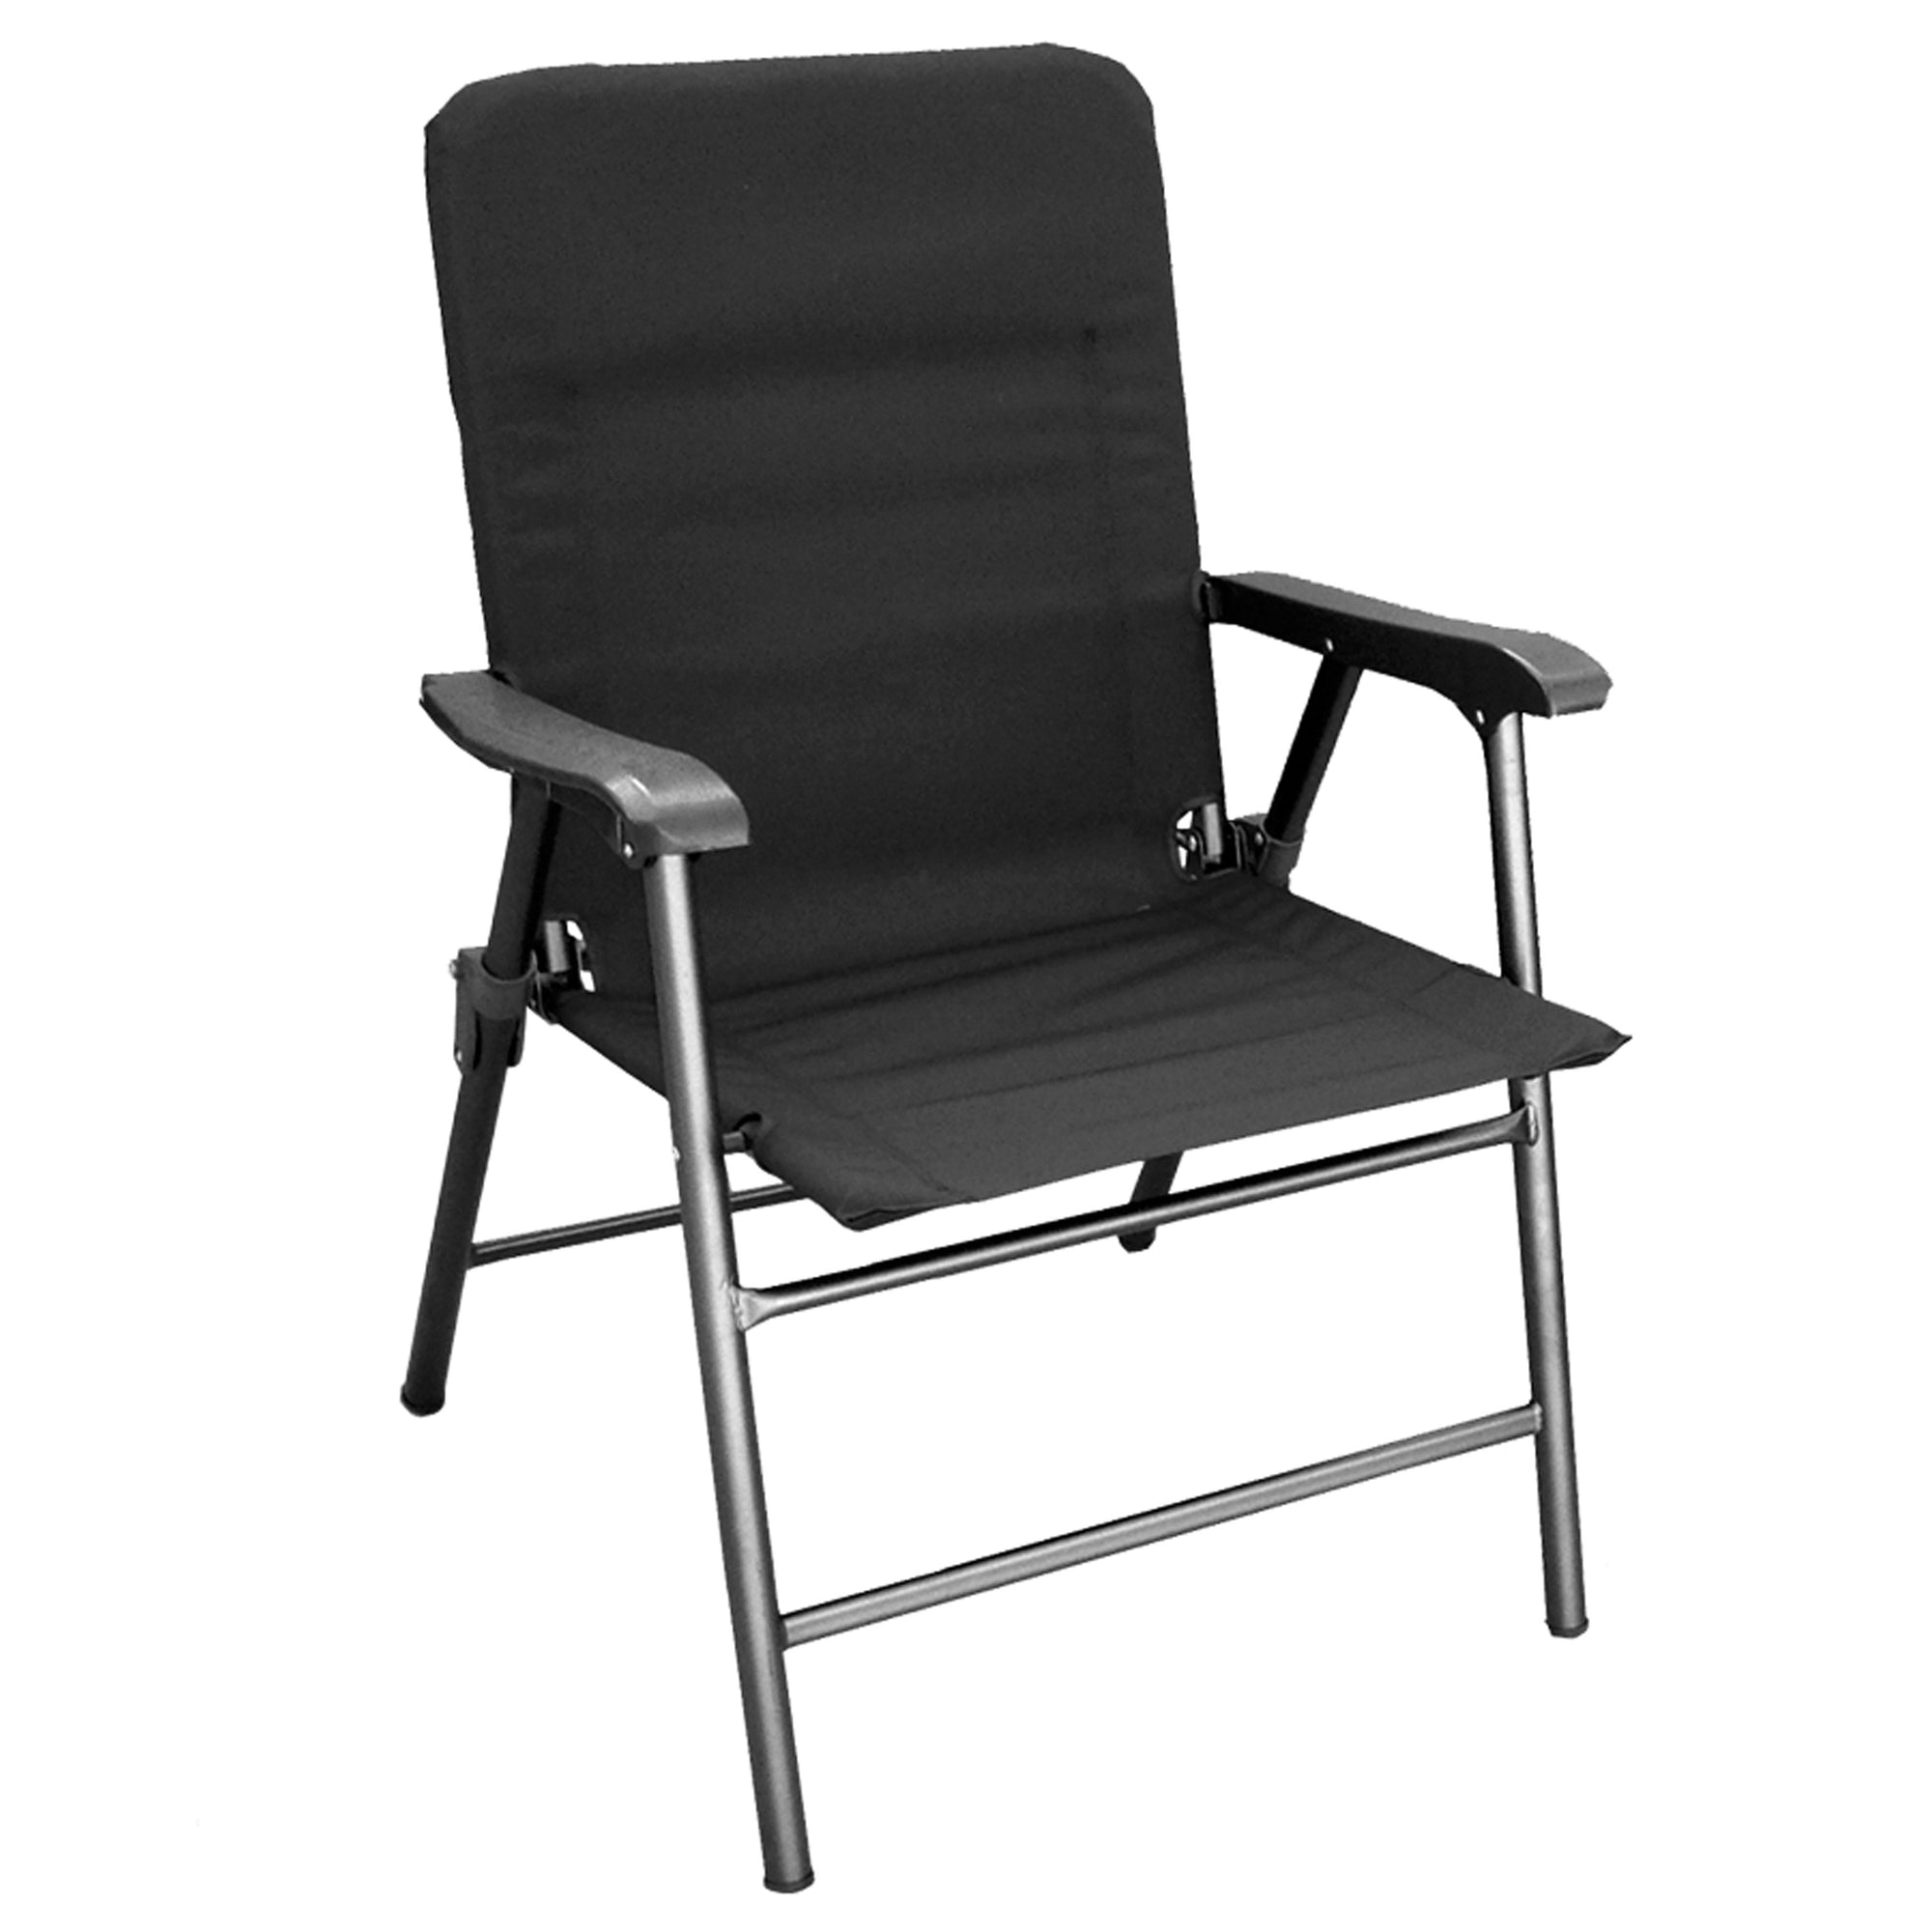 Prime Products 13-3349 Elite Folding Chair - Baja Black